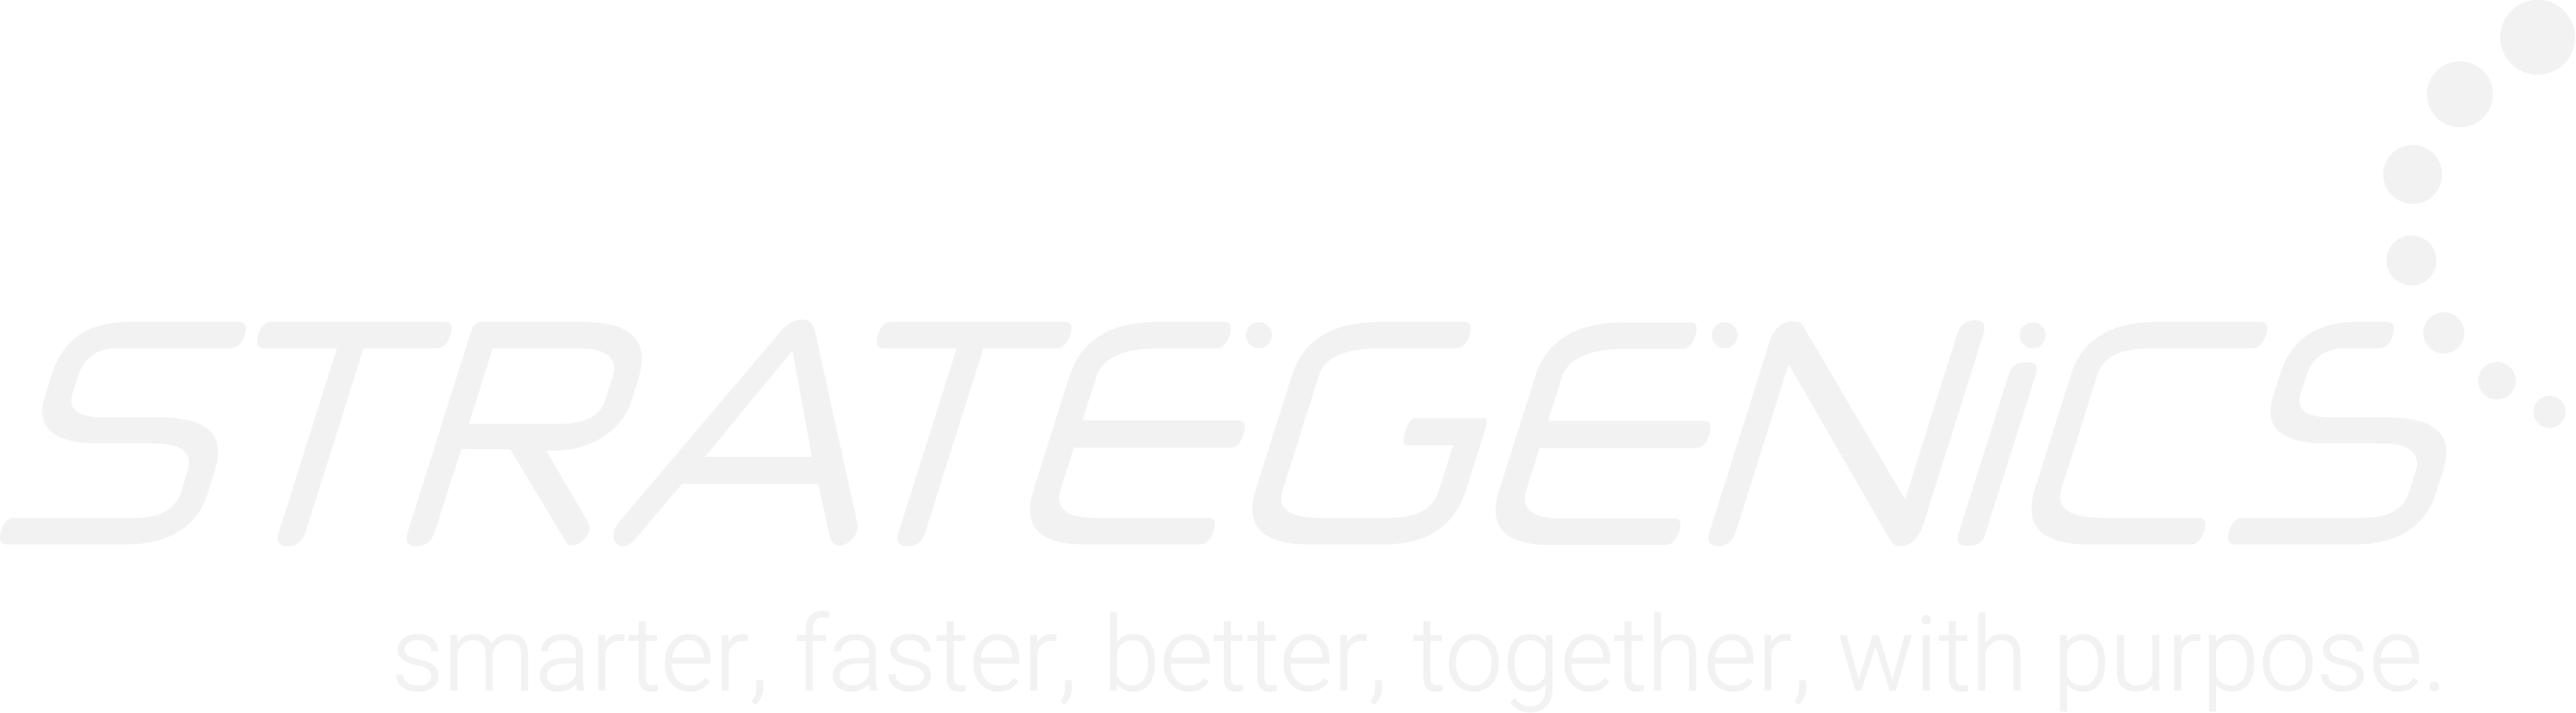 Strategenics logo